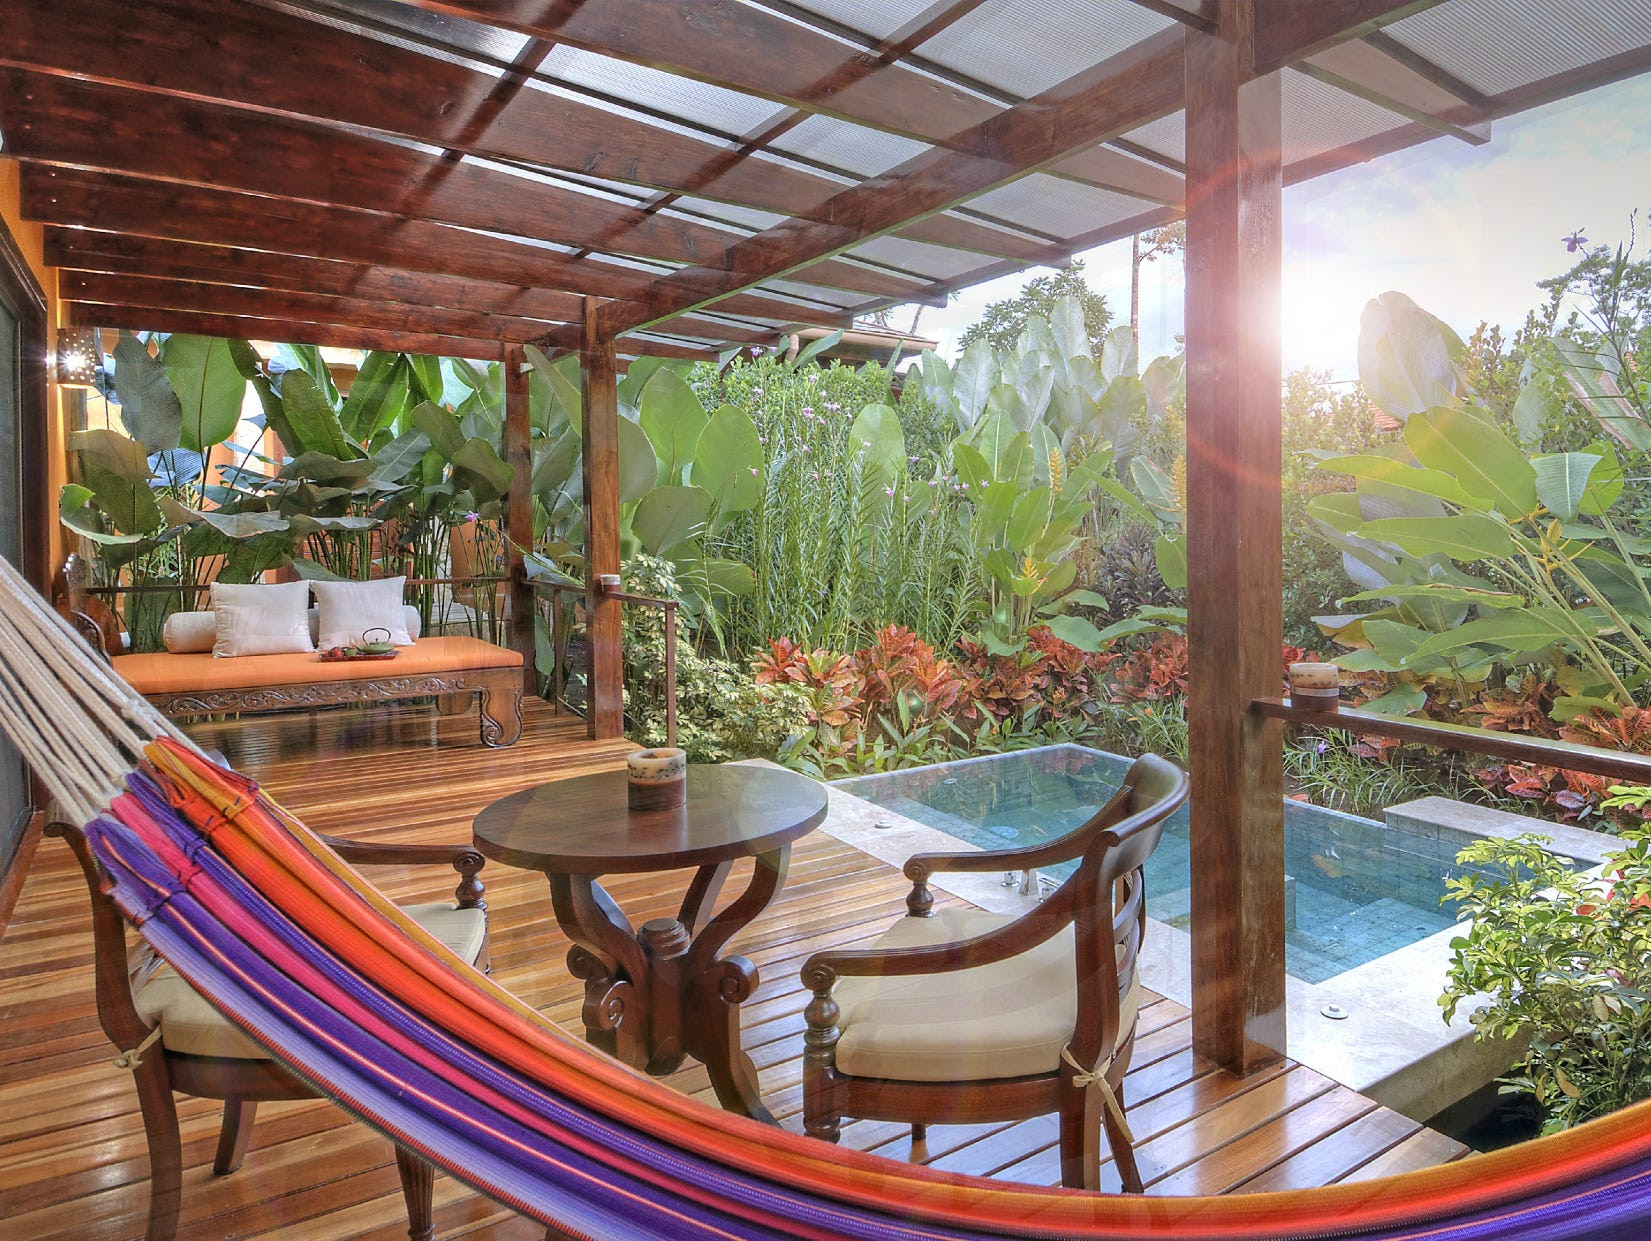 The Nayara Hotel, Spa & Gardens in La Fortuna de San Carlos, Costa Rica, is the No. 2 hotel in the world, according to Trip Advisor's 2015 Travelers' Choice awards.